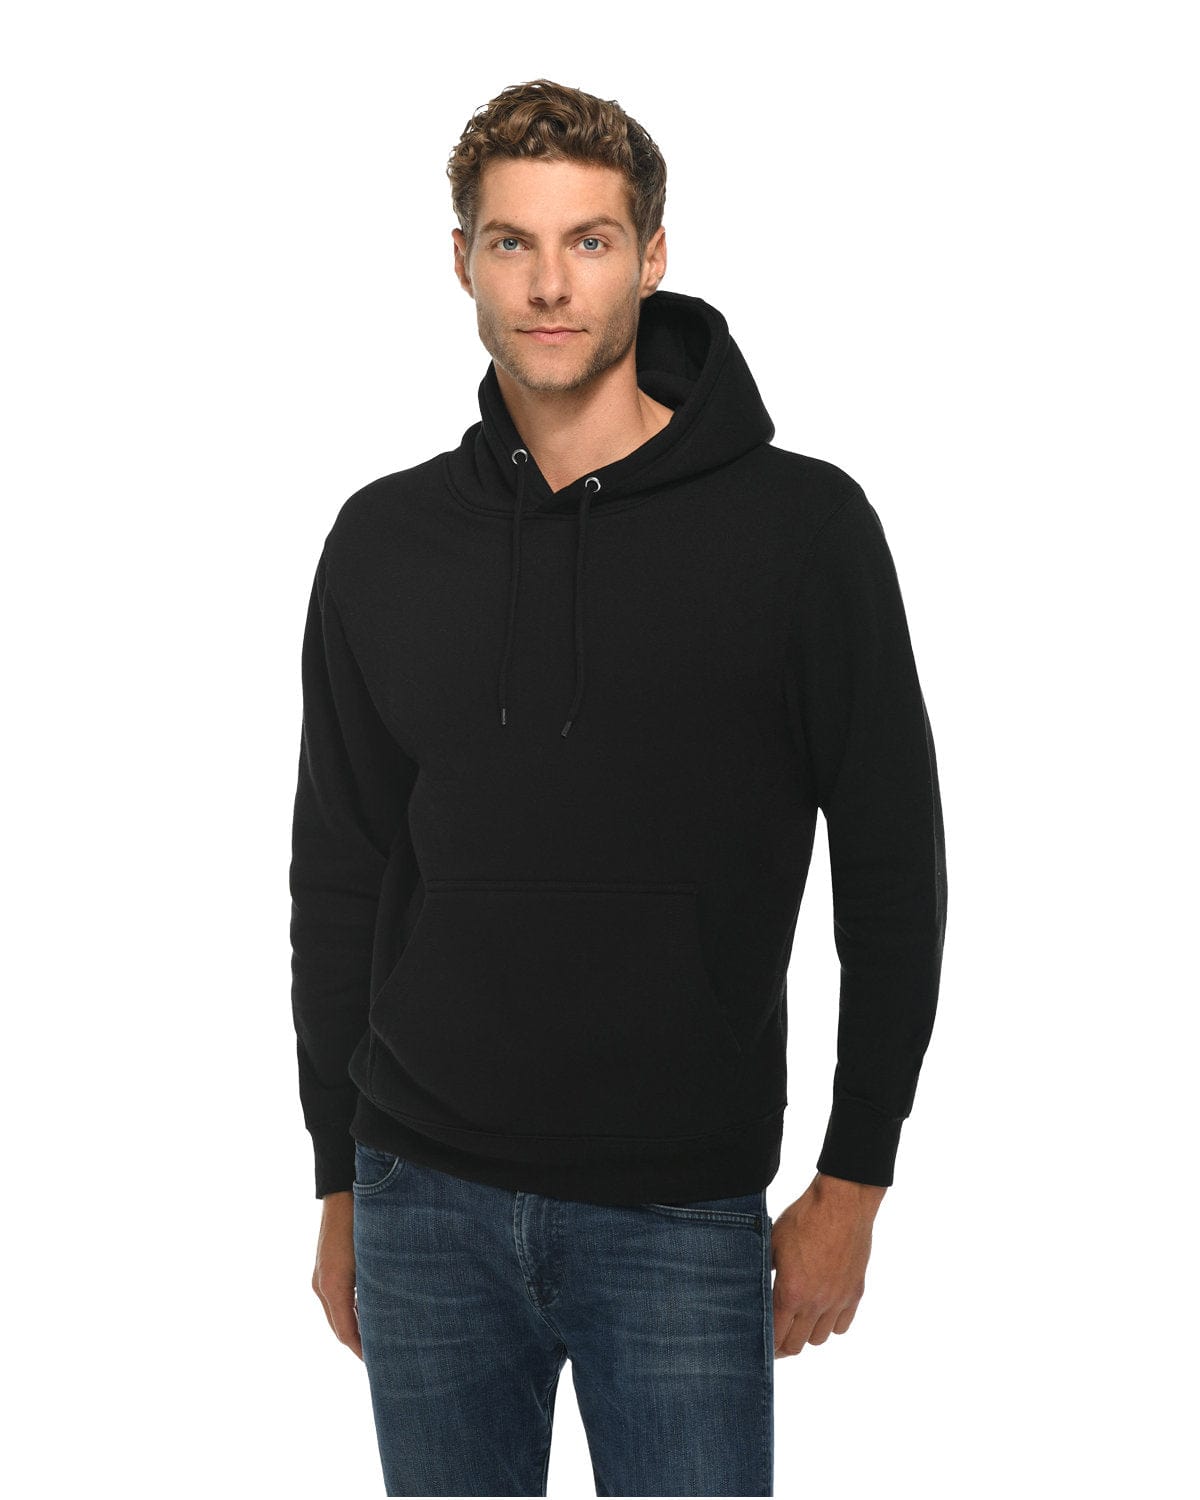 Lane Seven LS14001: Unisex Premium Pullover Hooded Sweatshirt, Basic Colors